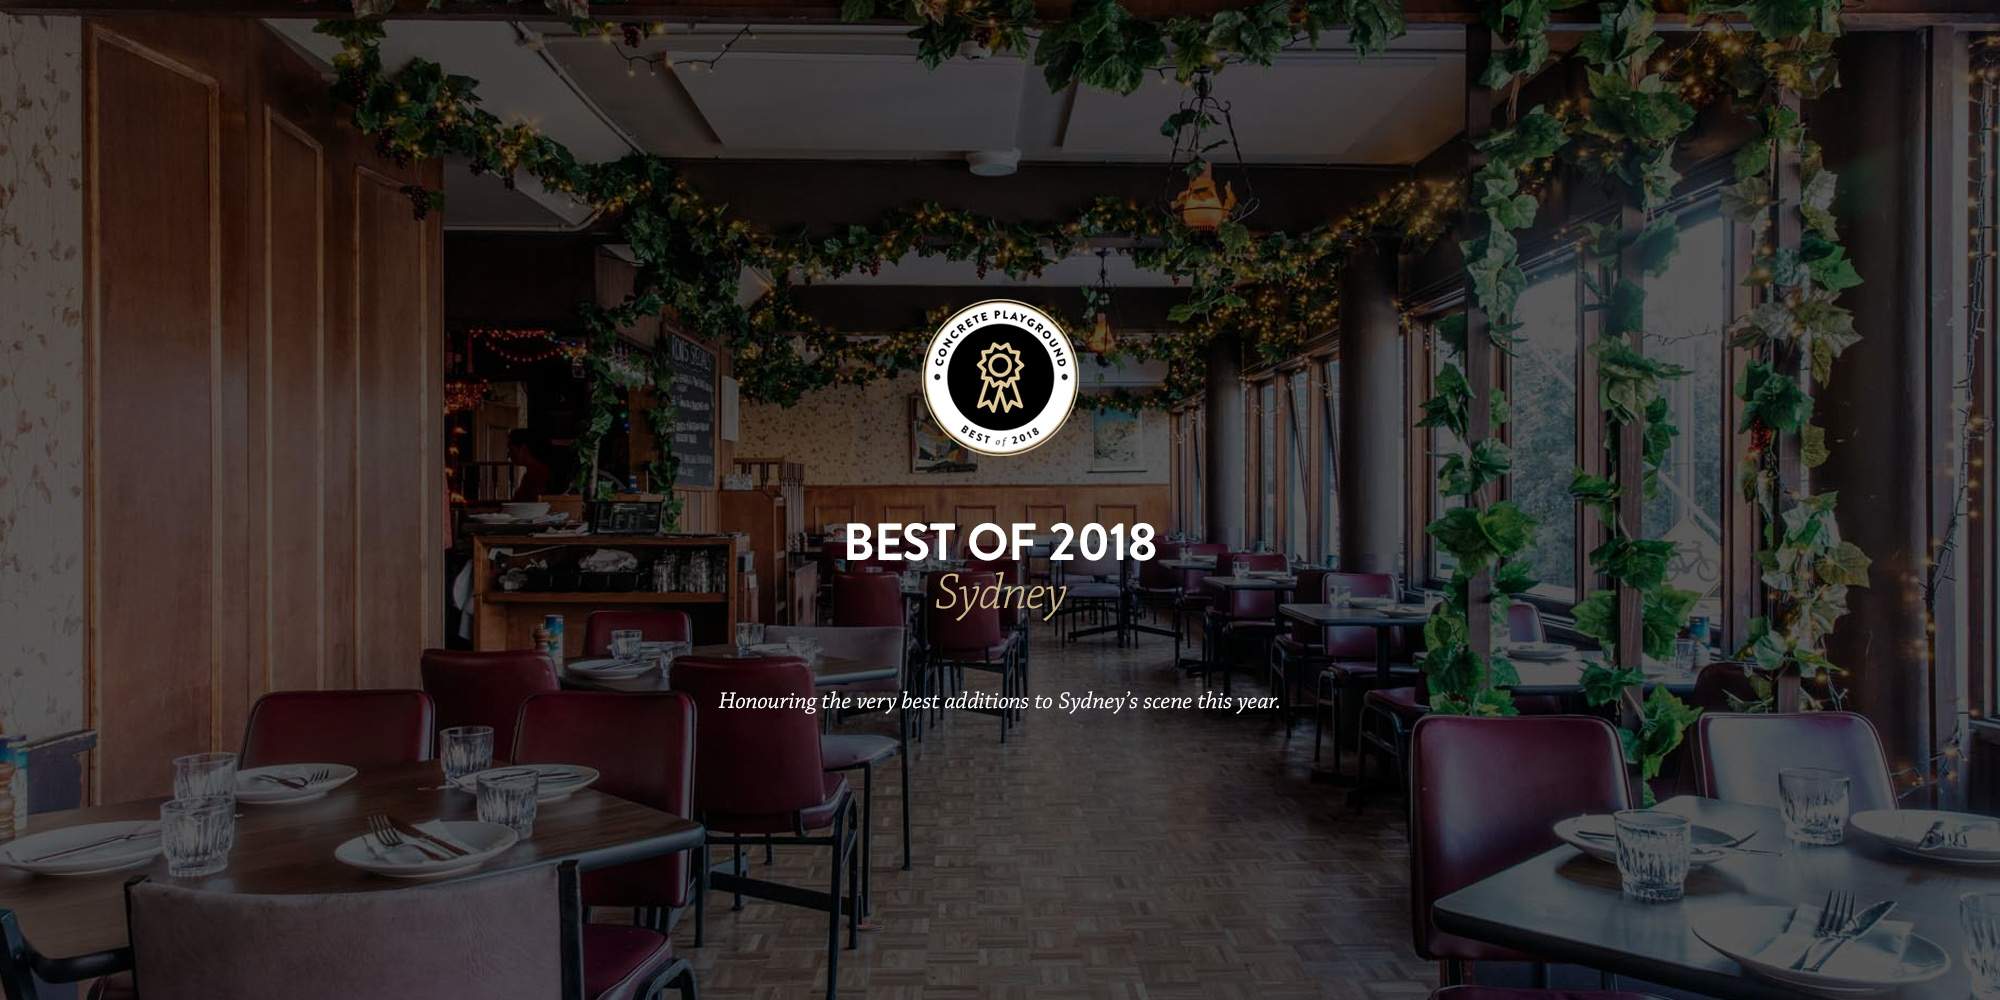 Best of 2018 Sydney